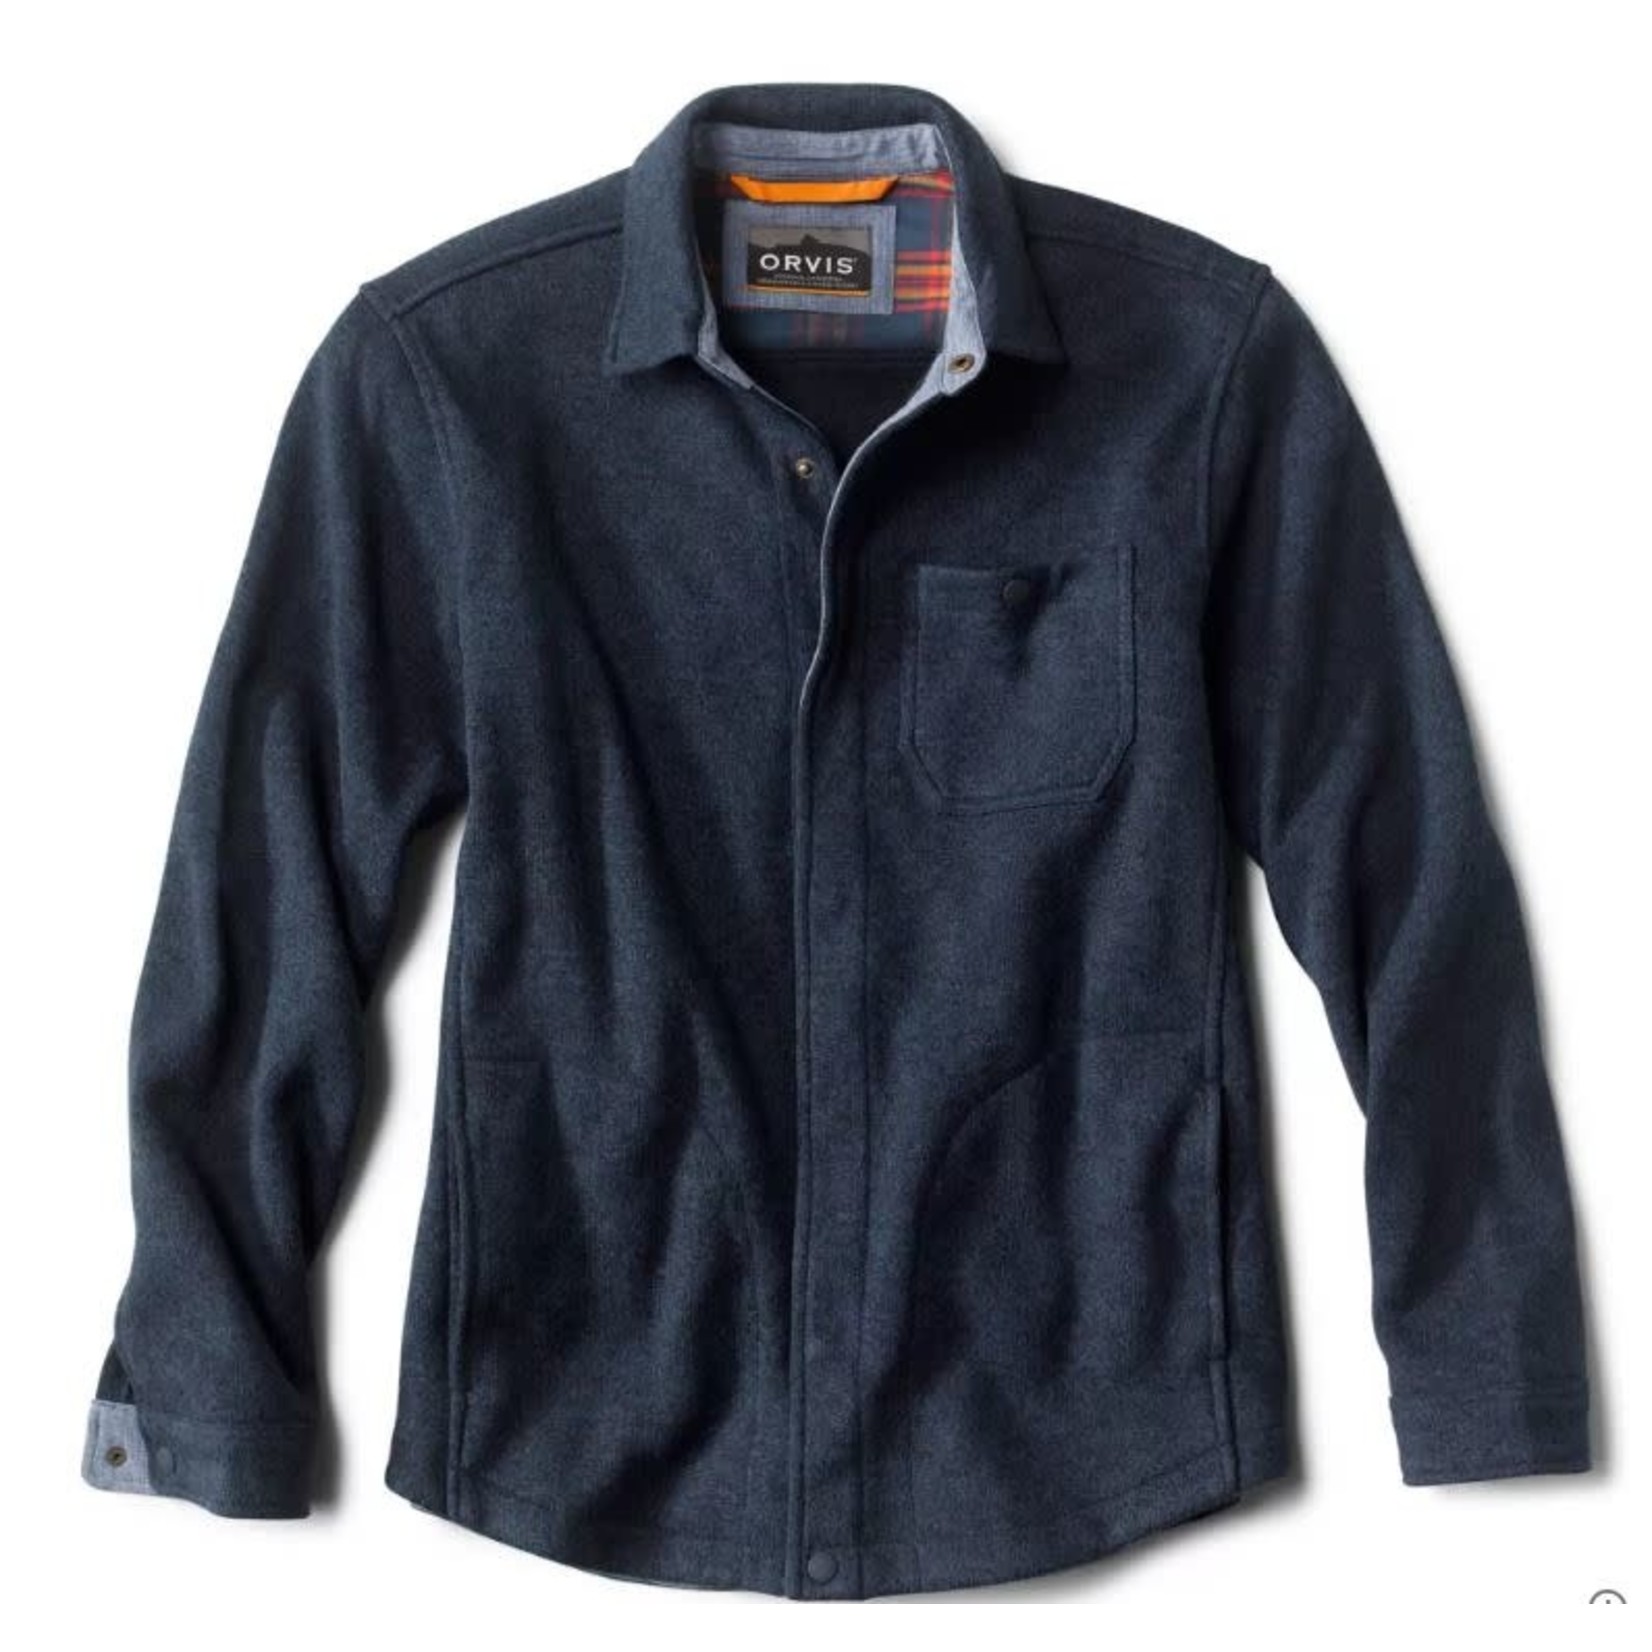 ORVIS Orvis R65 Sweater Fleece Shirt Jacket